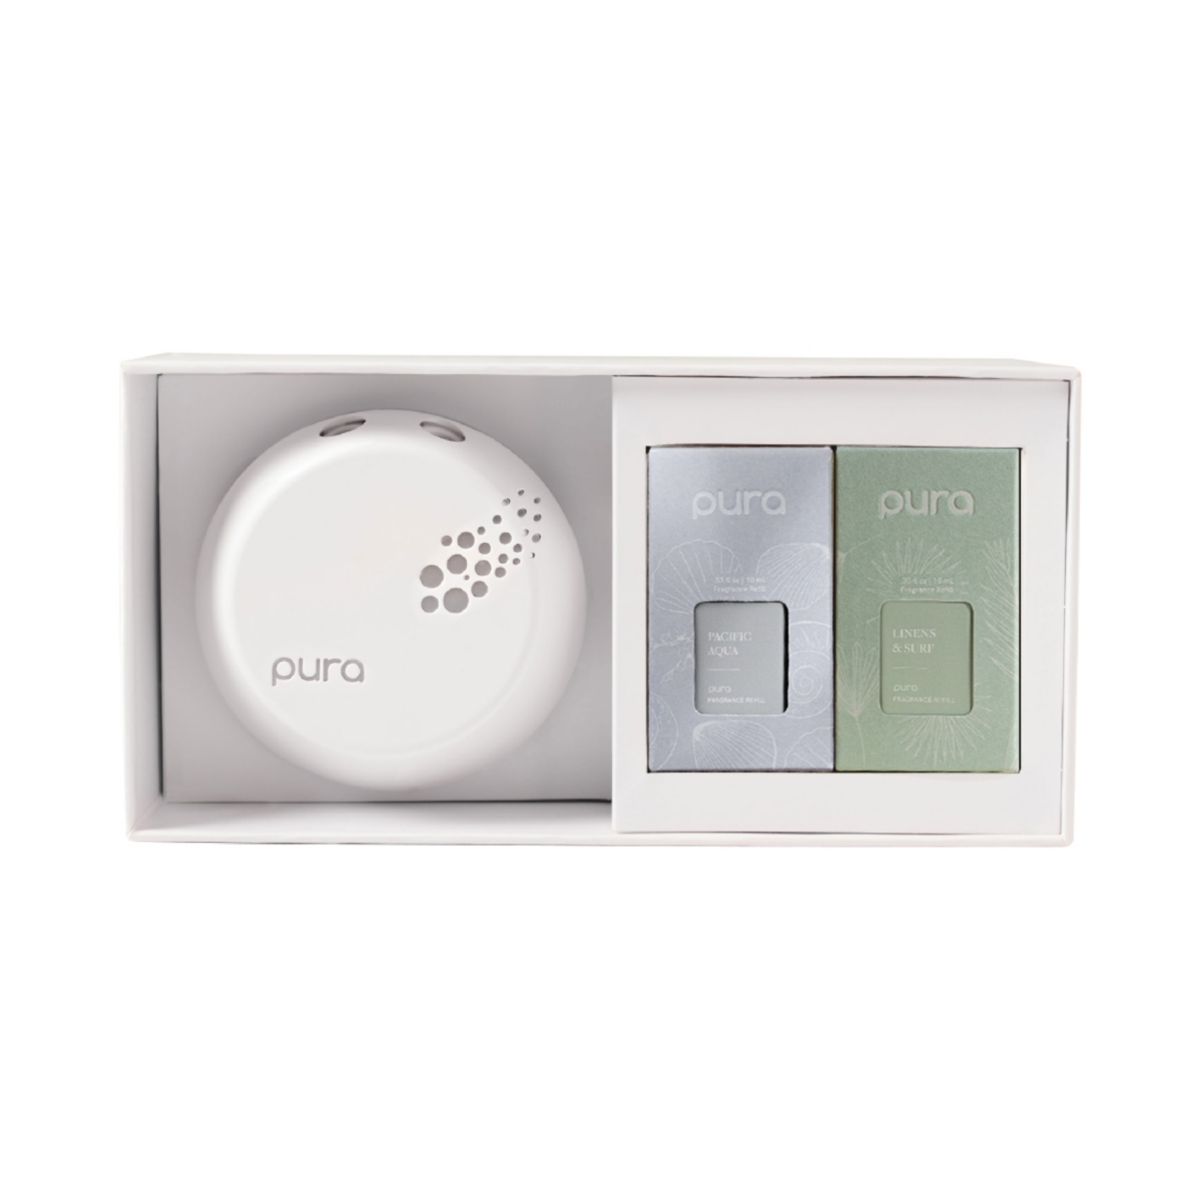 Smart Fragrance Diffuser Device Set - Linens & Surf, Pacific Aqua - Home Scent Diffuser with Refills - Fragrance Diffuser - White